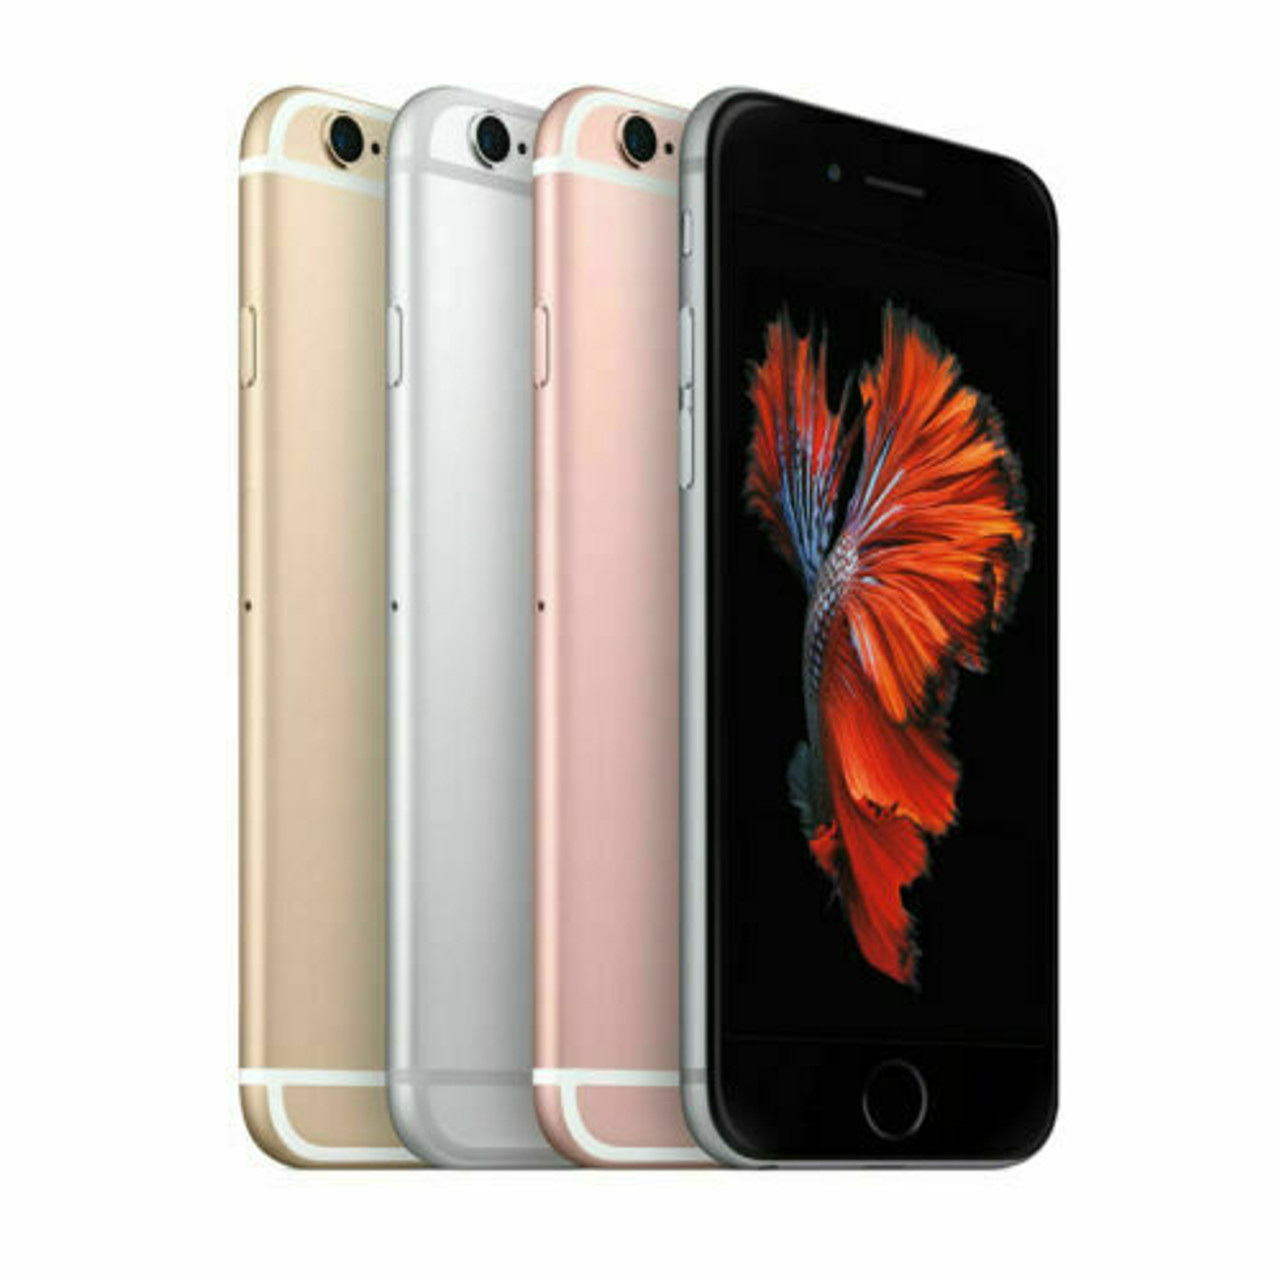 Apple iPhone 6s Plus Smartphone